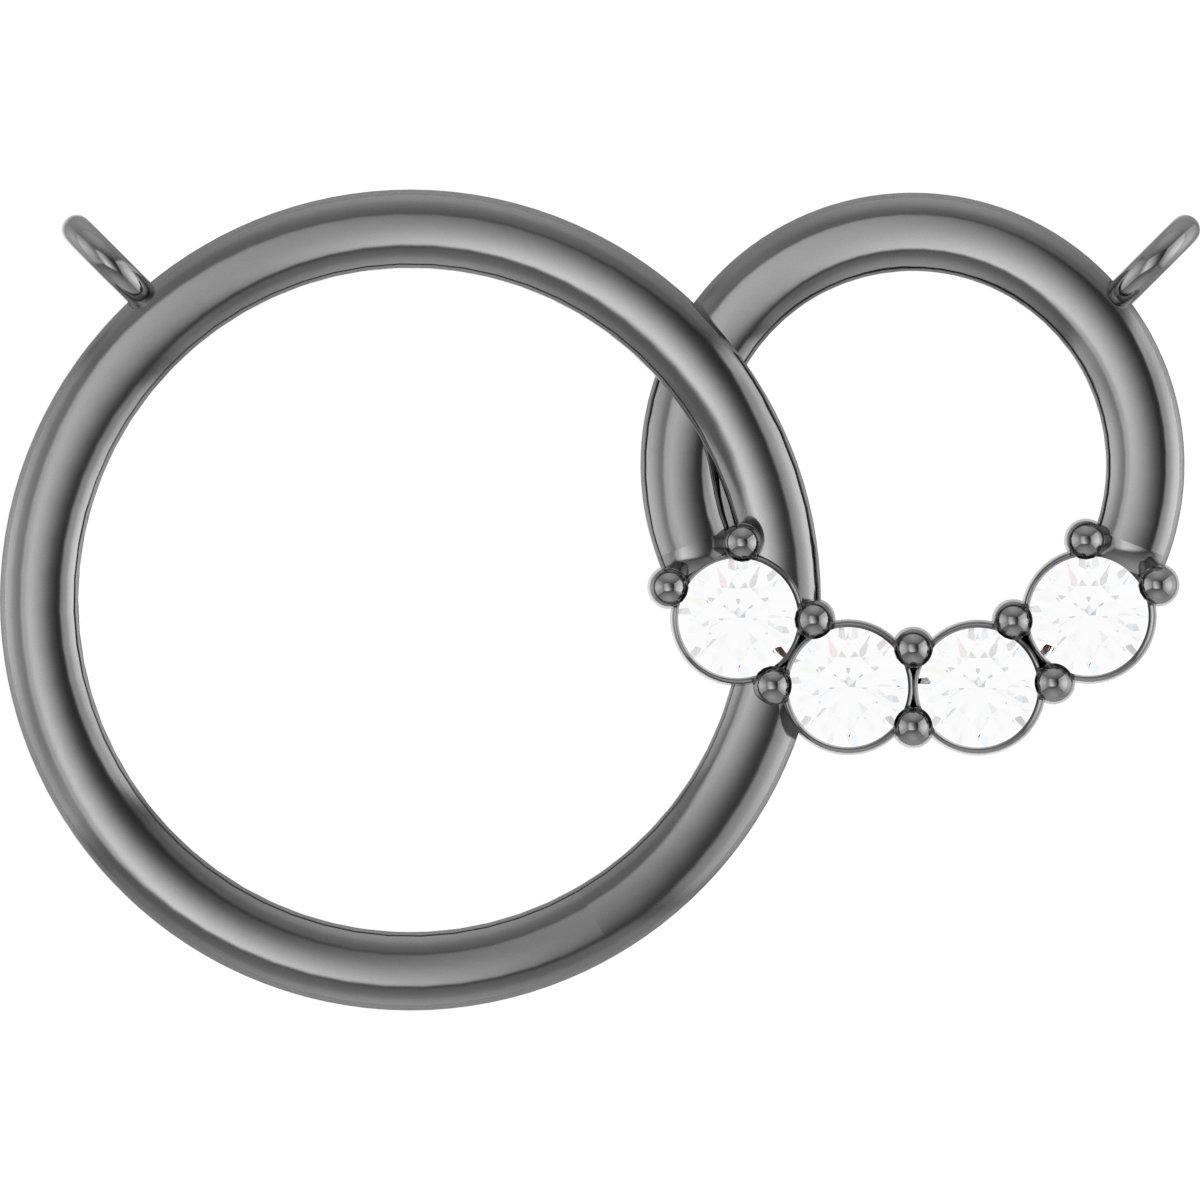 Family Interlocking Circle Necklace or Center